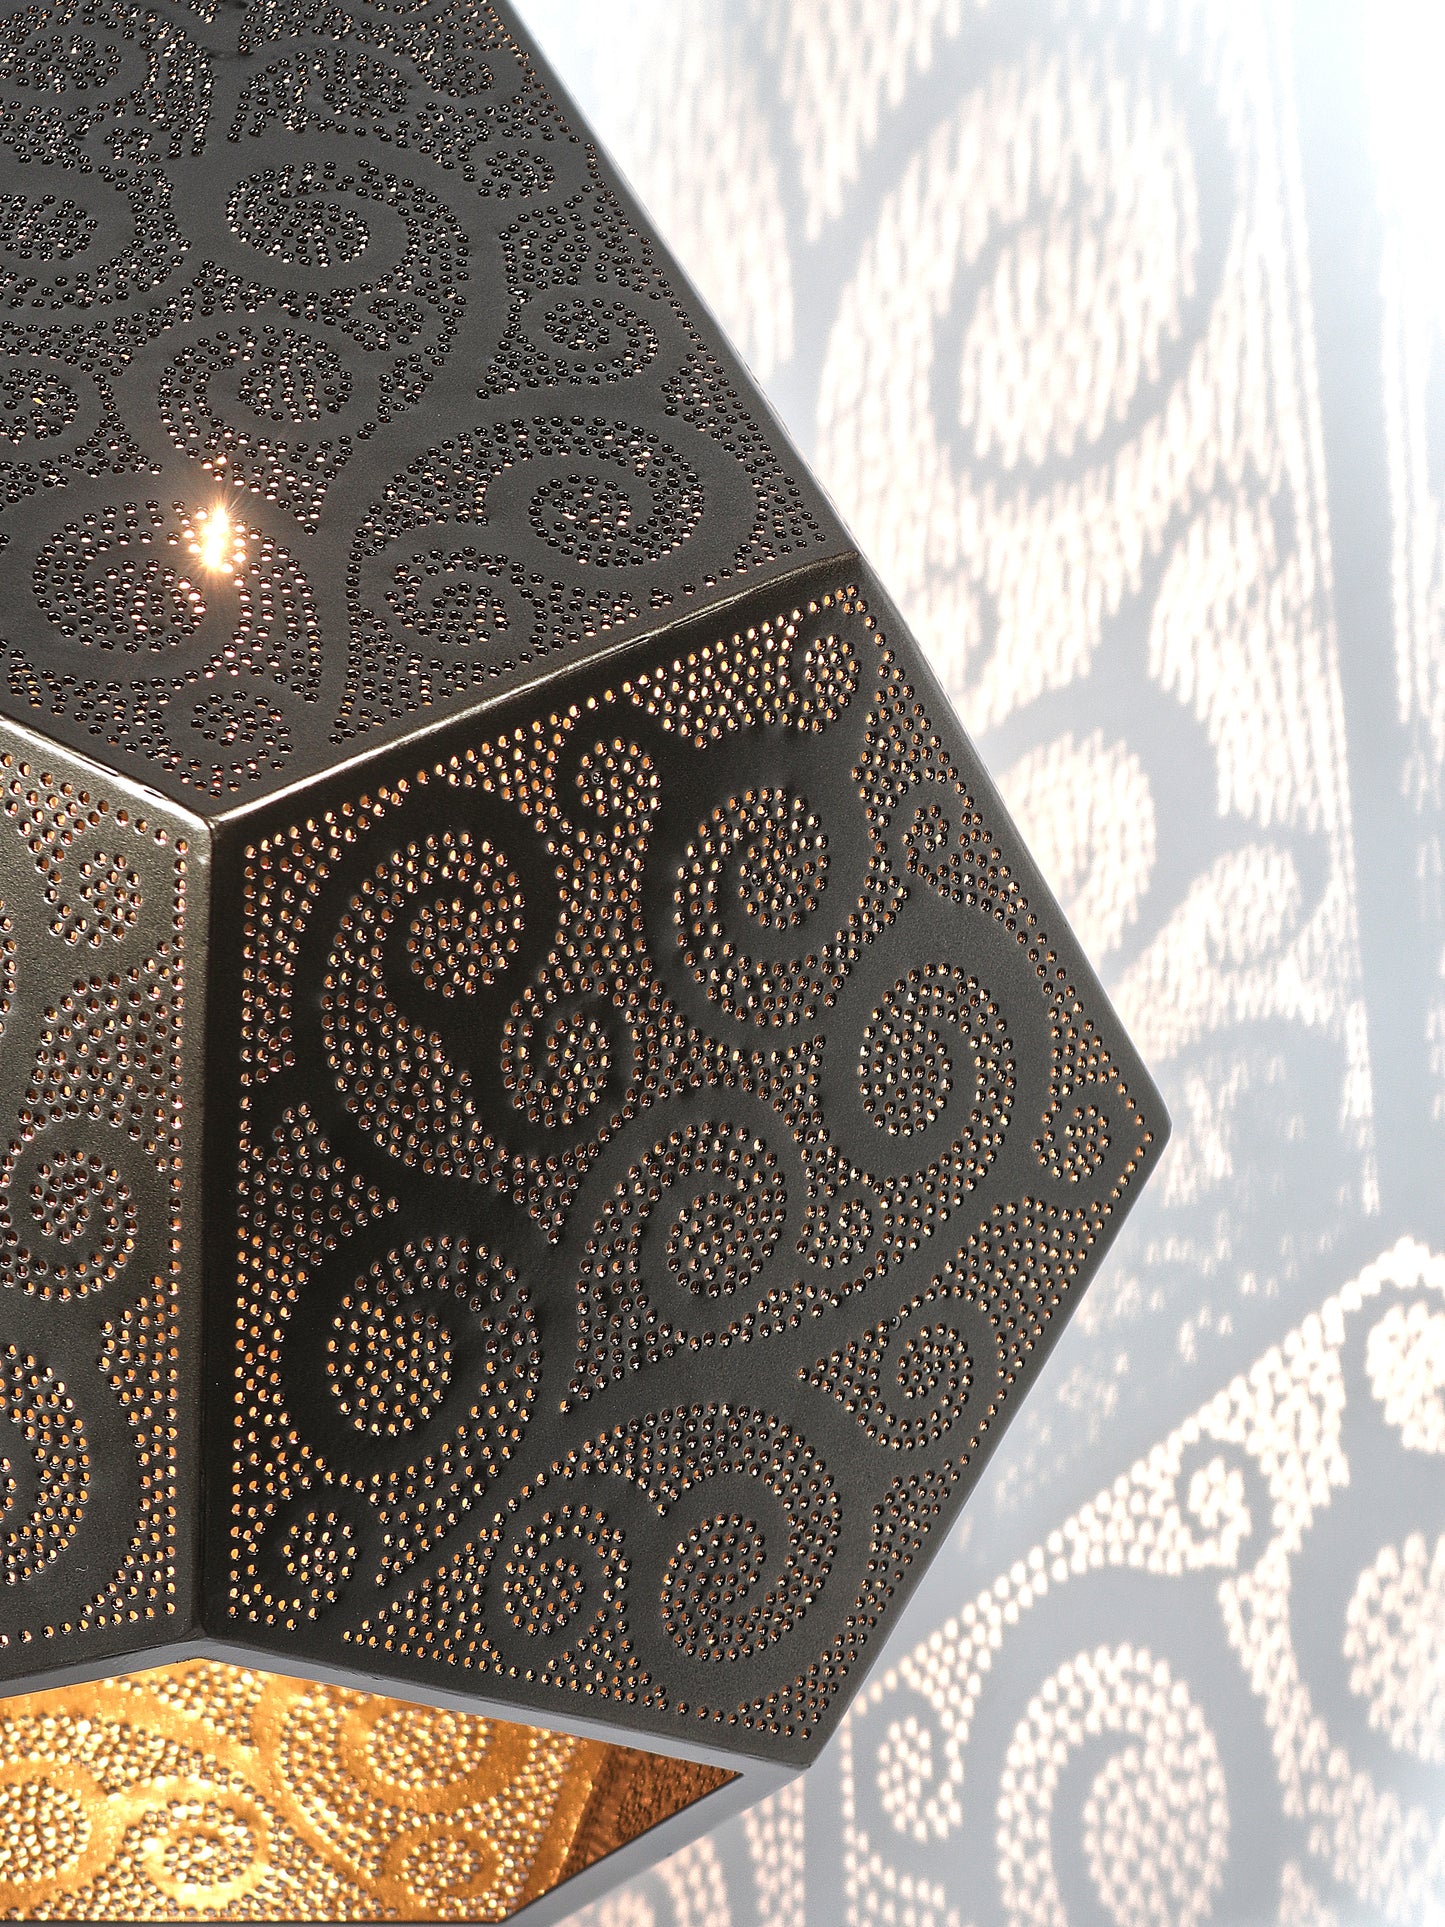 Moroccan Decorative Big Lantern Hanging Lamp Diamond Shape